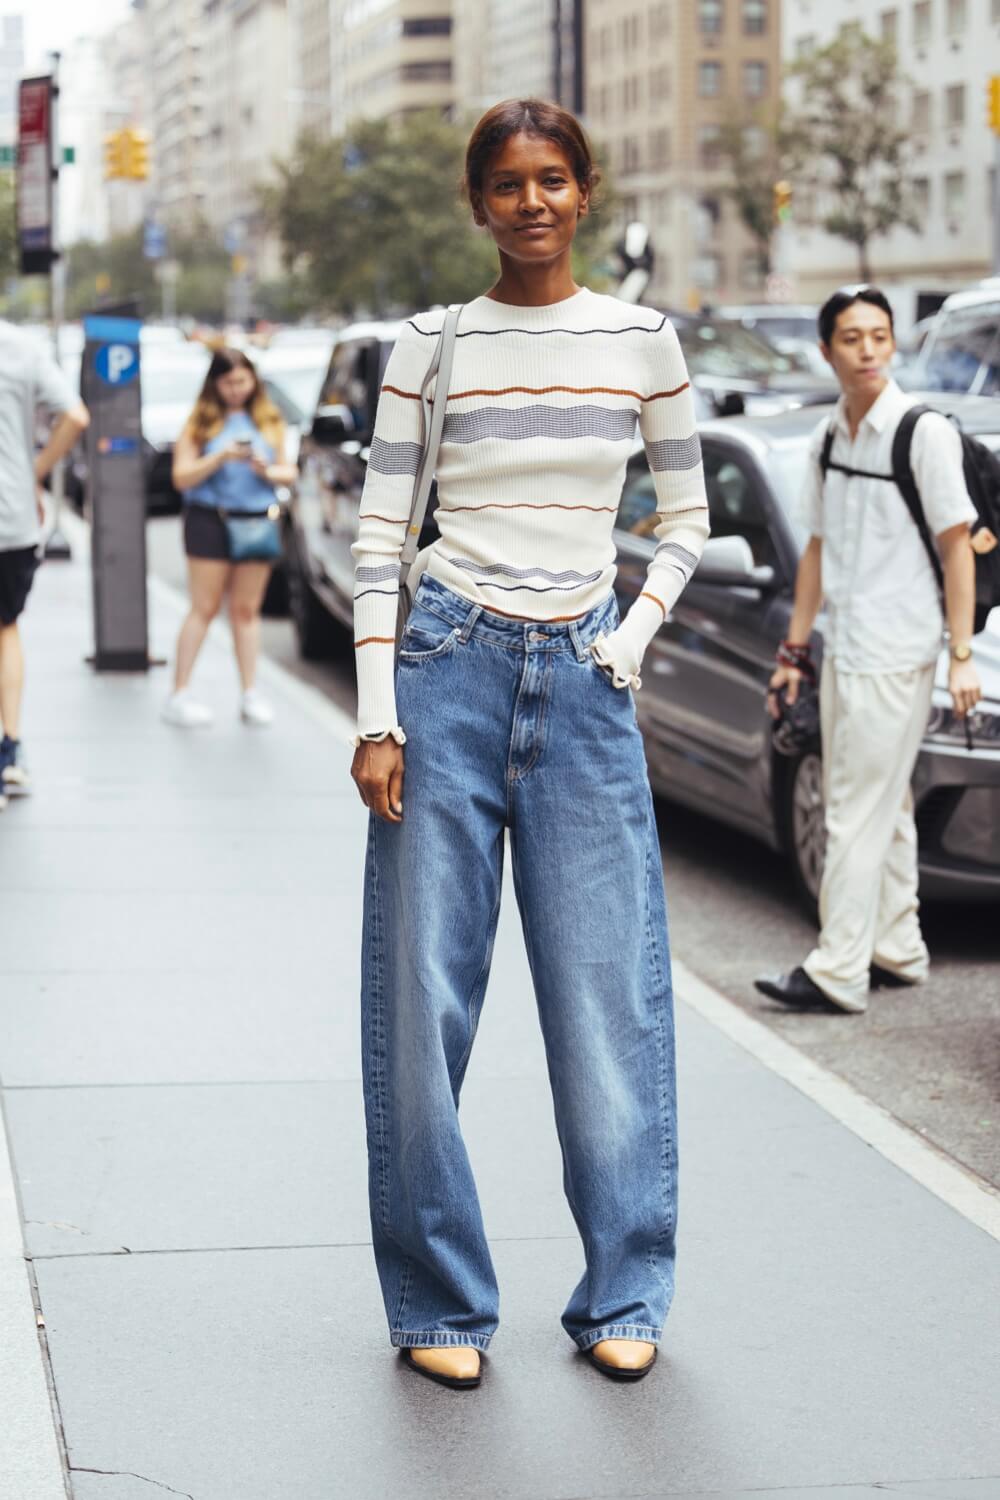 Proenza Schouler New York Fashion Week Knitwear and Jeans